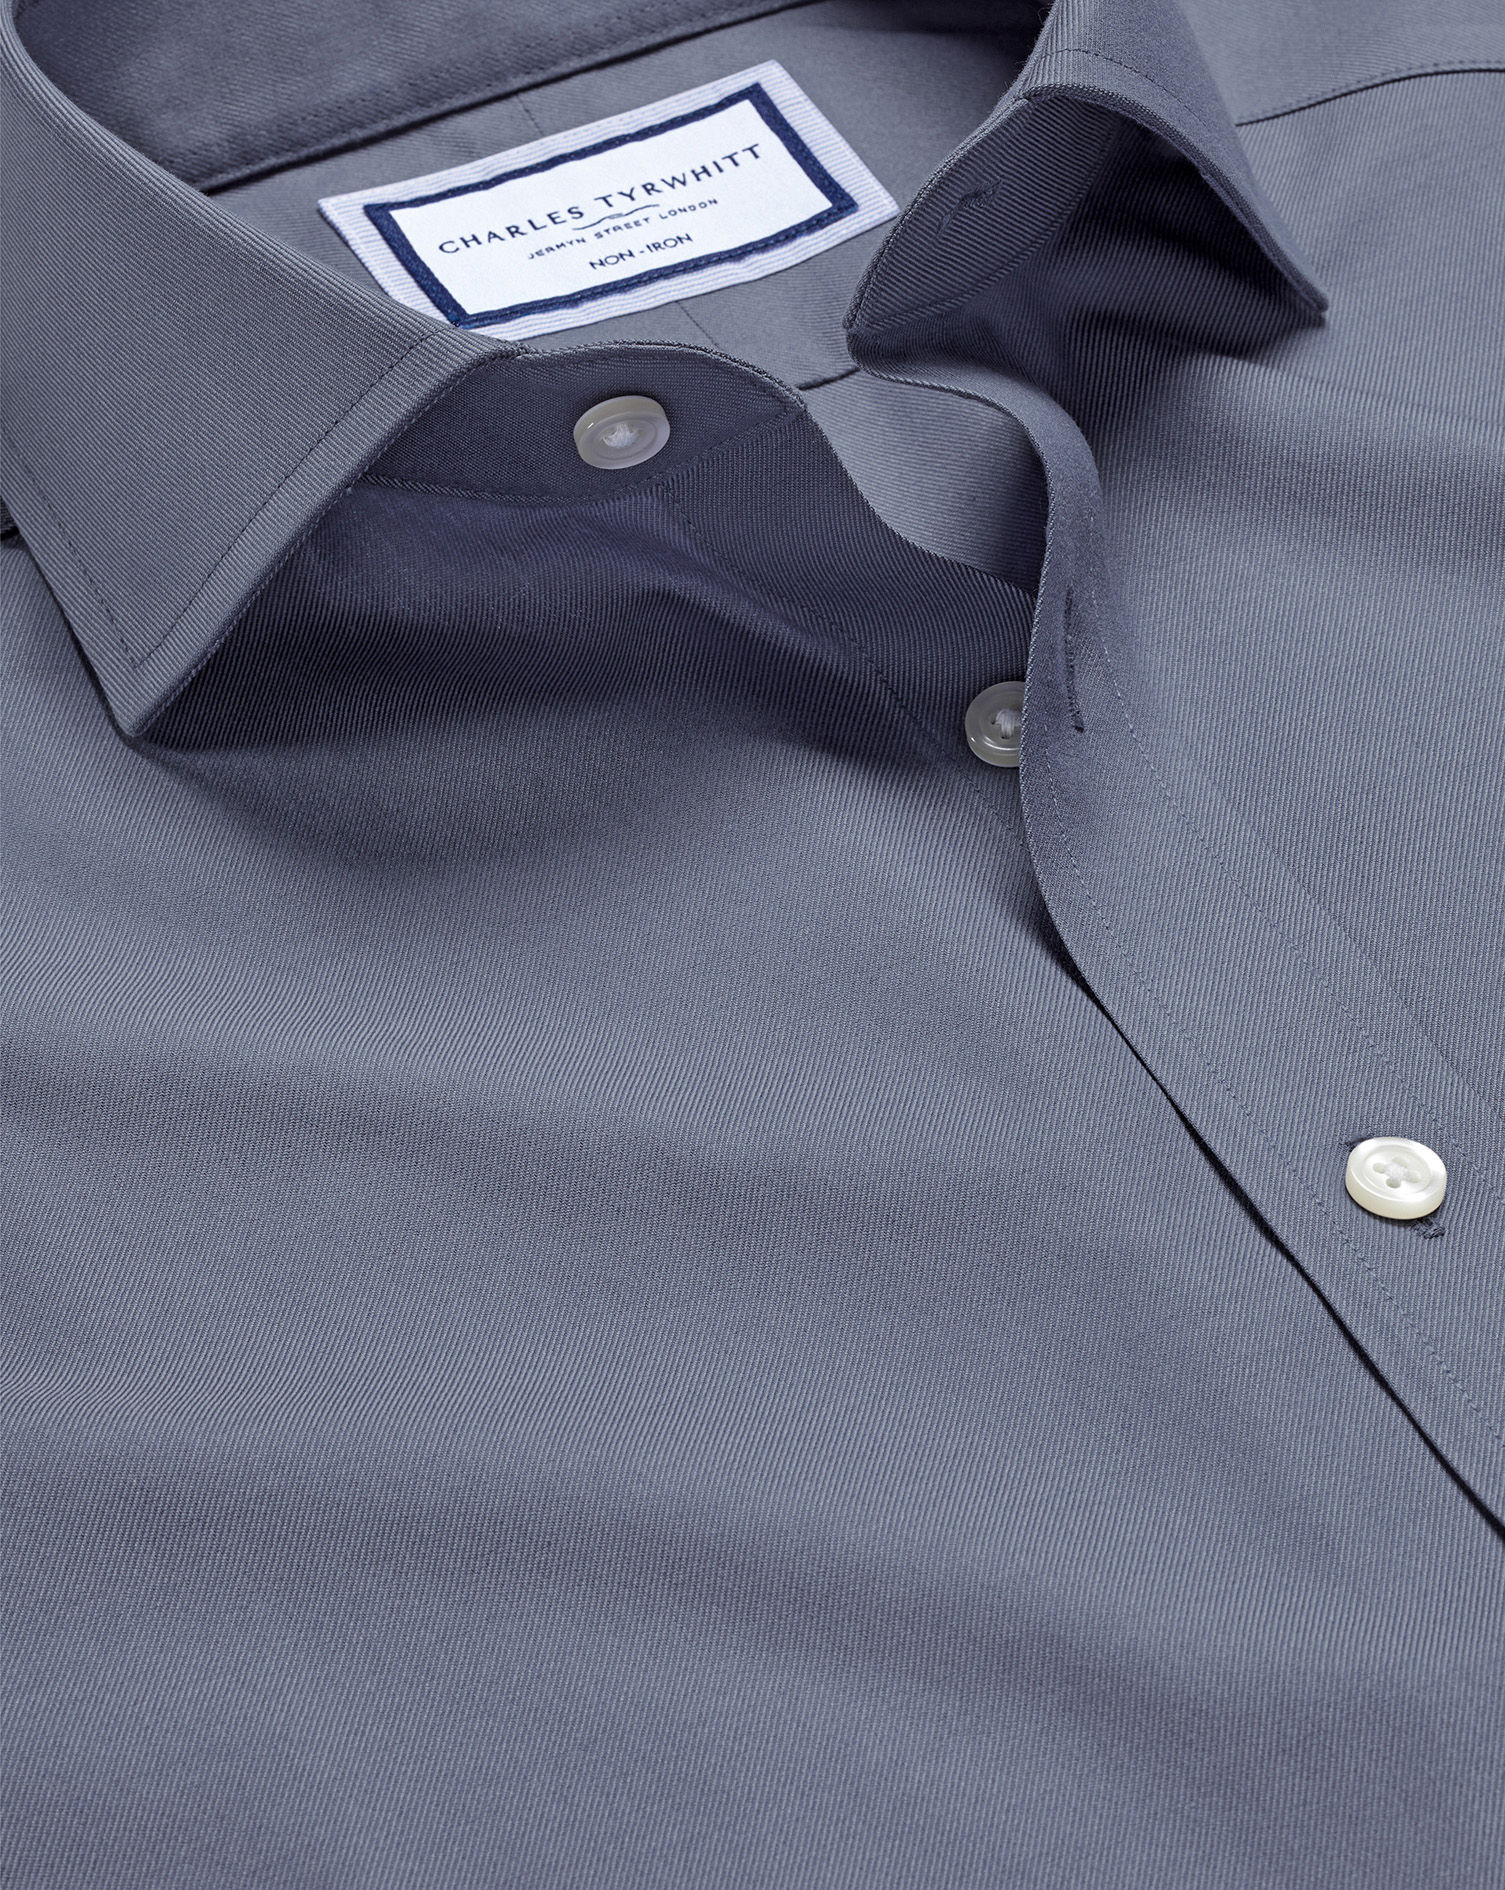 Men's Charles Tyrwhitt Cutaway Collar Non-Iron Twill Dress Shirt - Heather Blue Single Cuff Size 15.